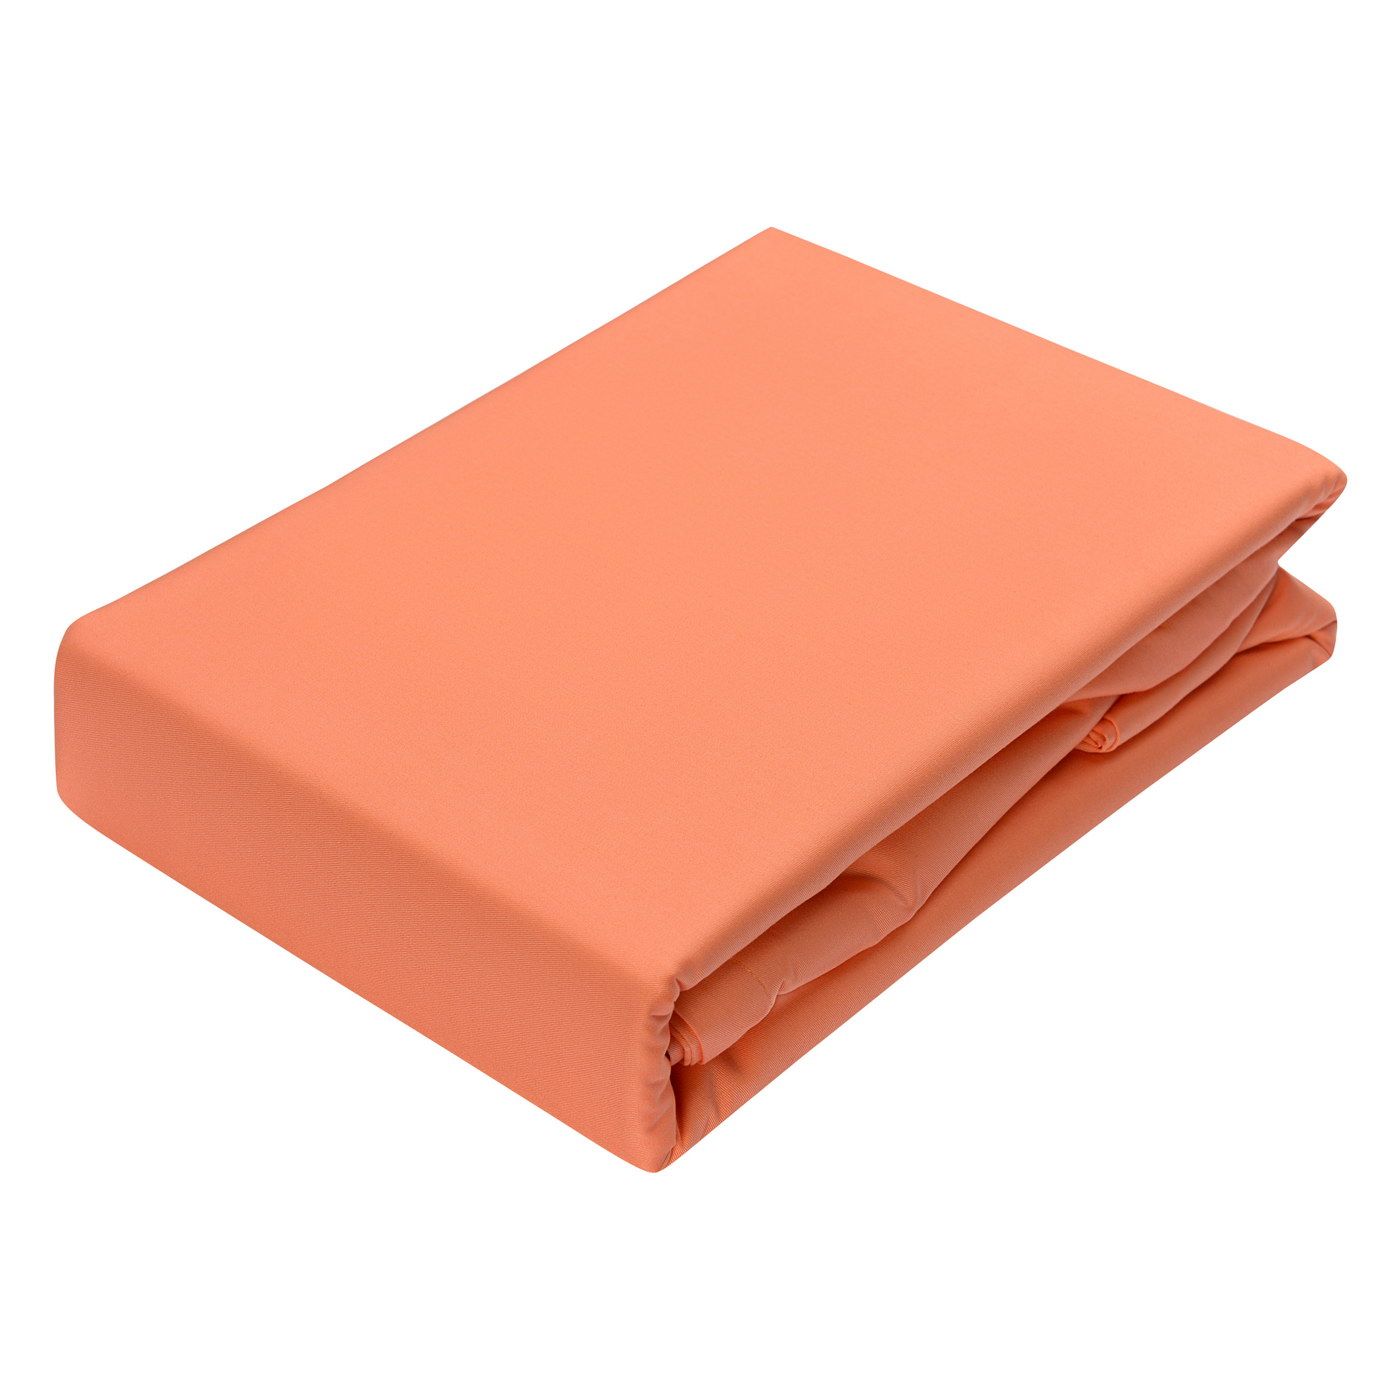 Пододеяльник Мармис цвет: оранжевый (160х220 см), размер 160х220 см sofi978980 Пододеяльник Мармис цвет: оранжевый (160х220 см) - фото 1